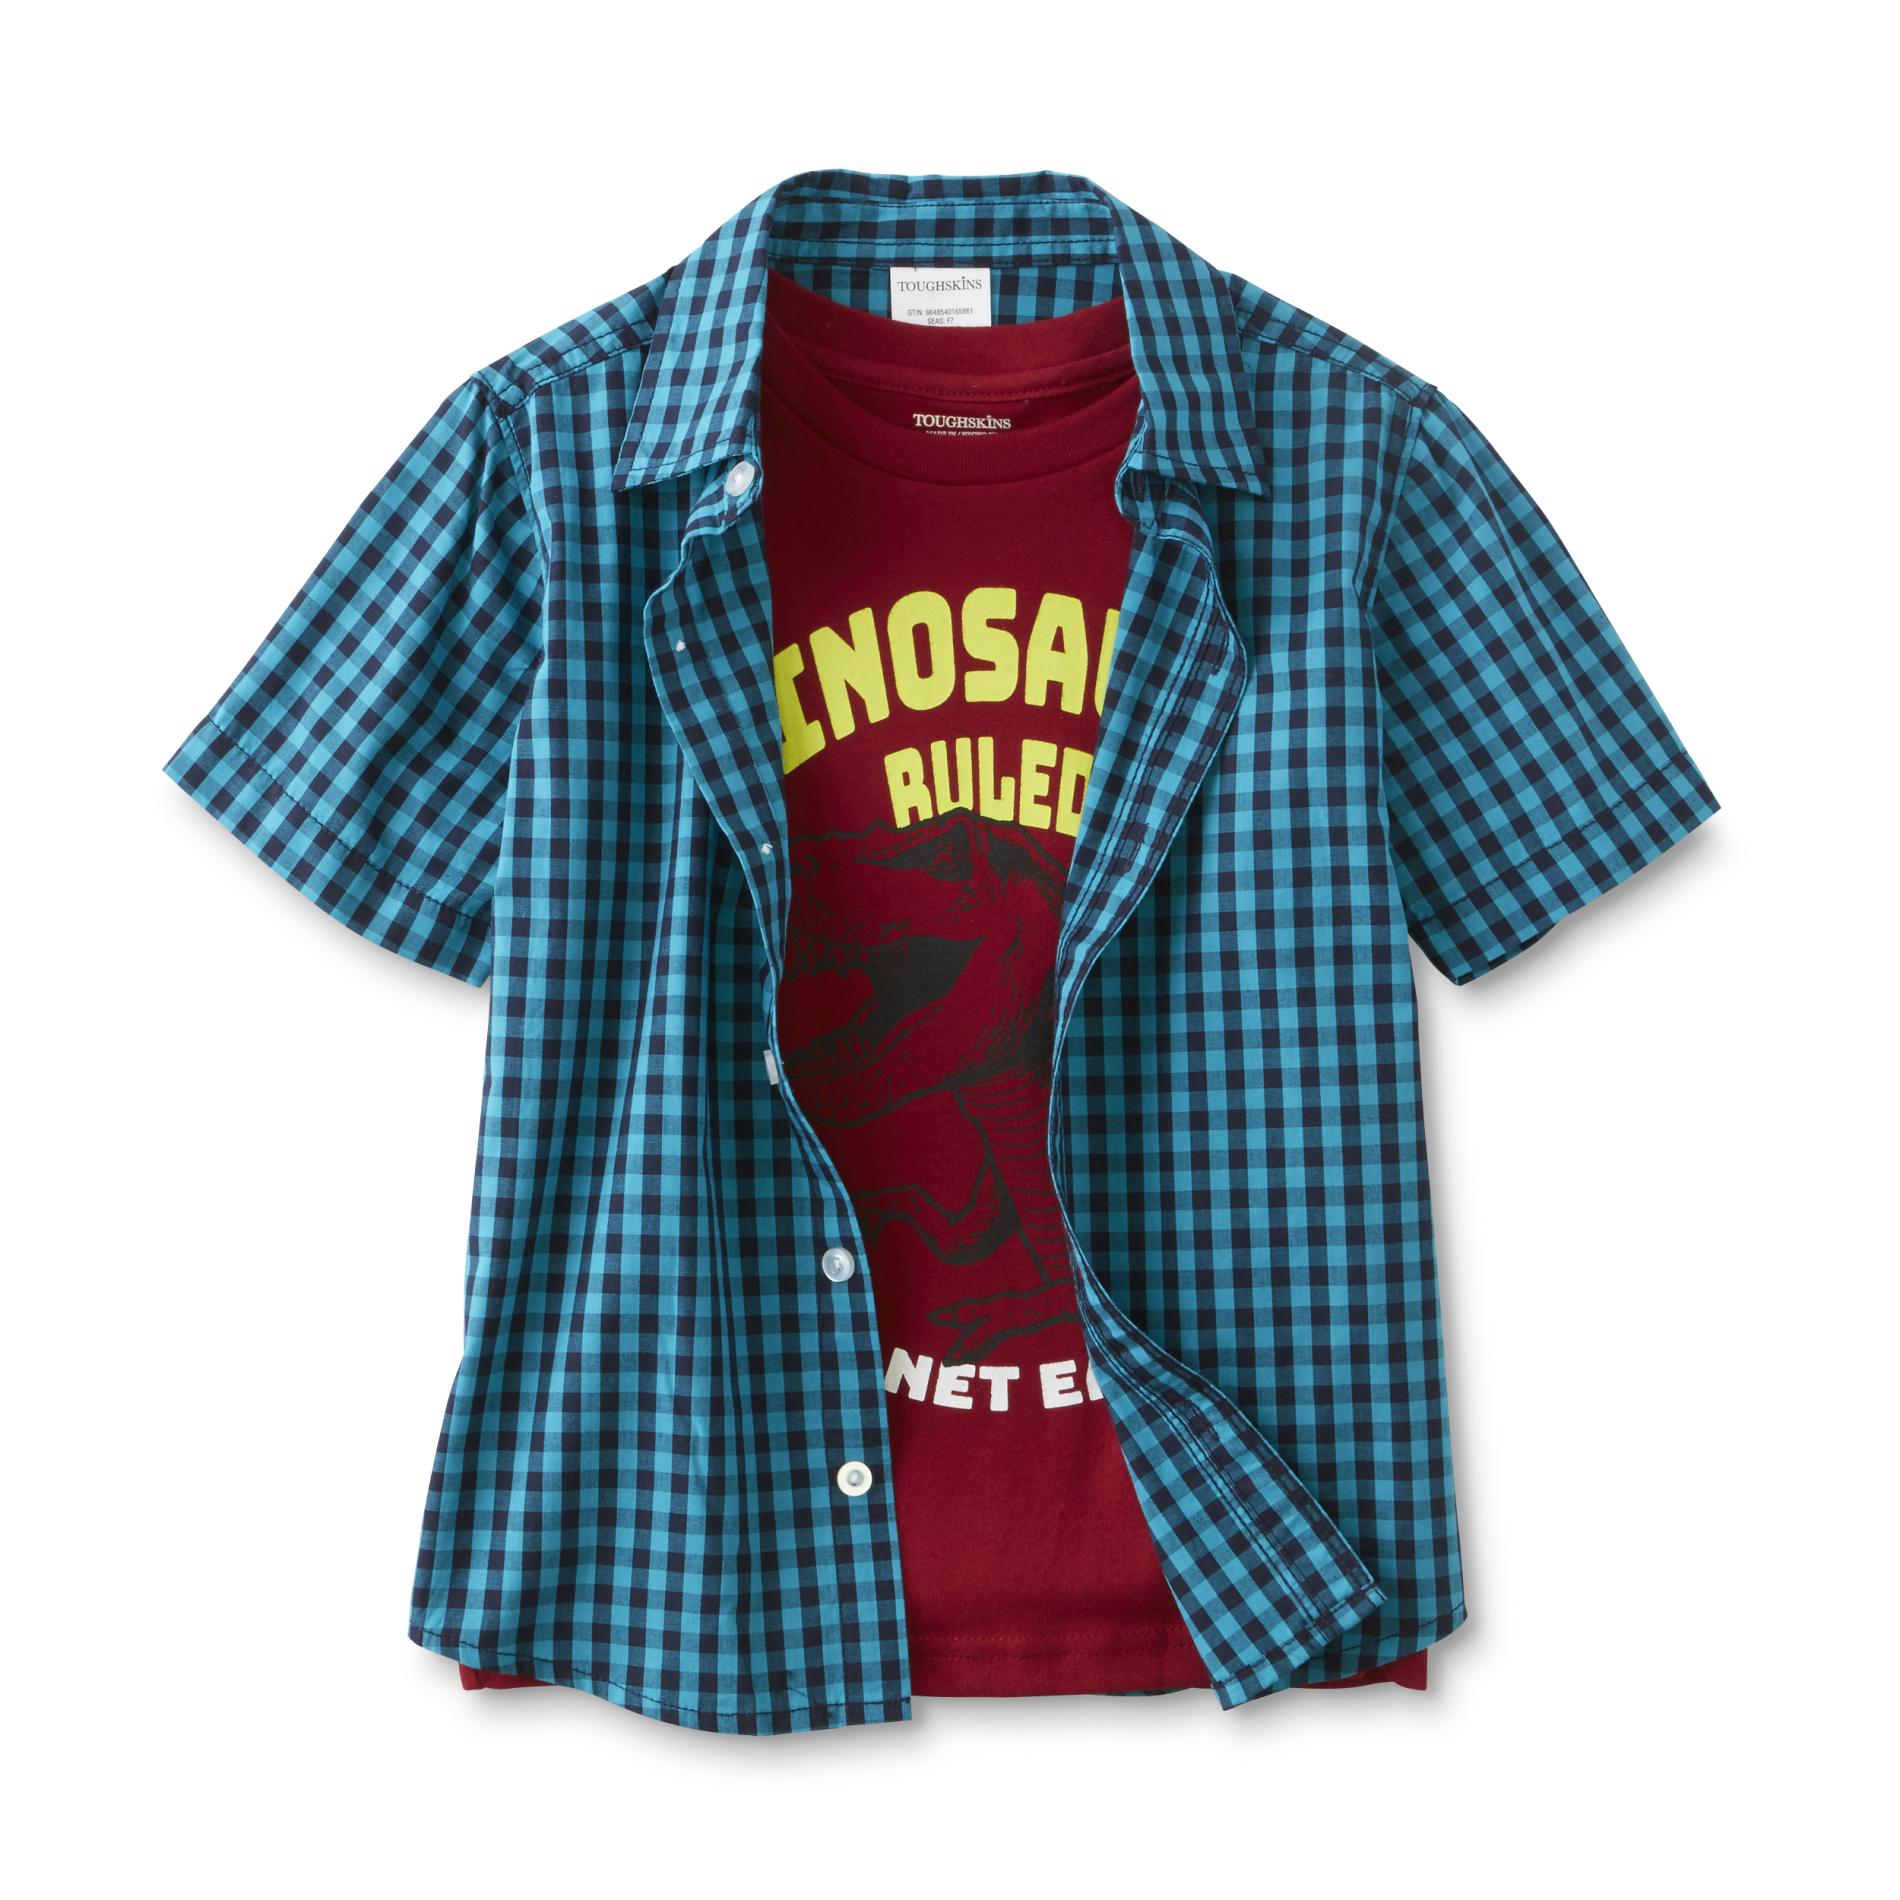 Toughskins Infants & Toddler Boys' Shirt & Graphic T-Shirt - Dinosaur